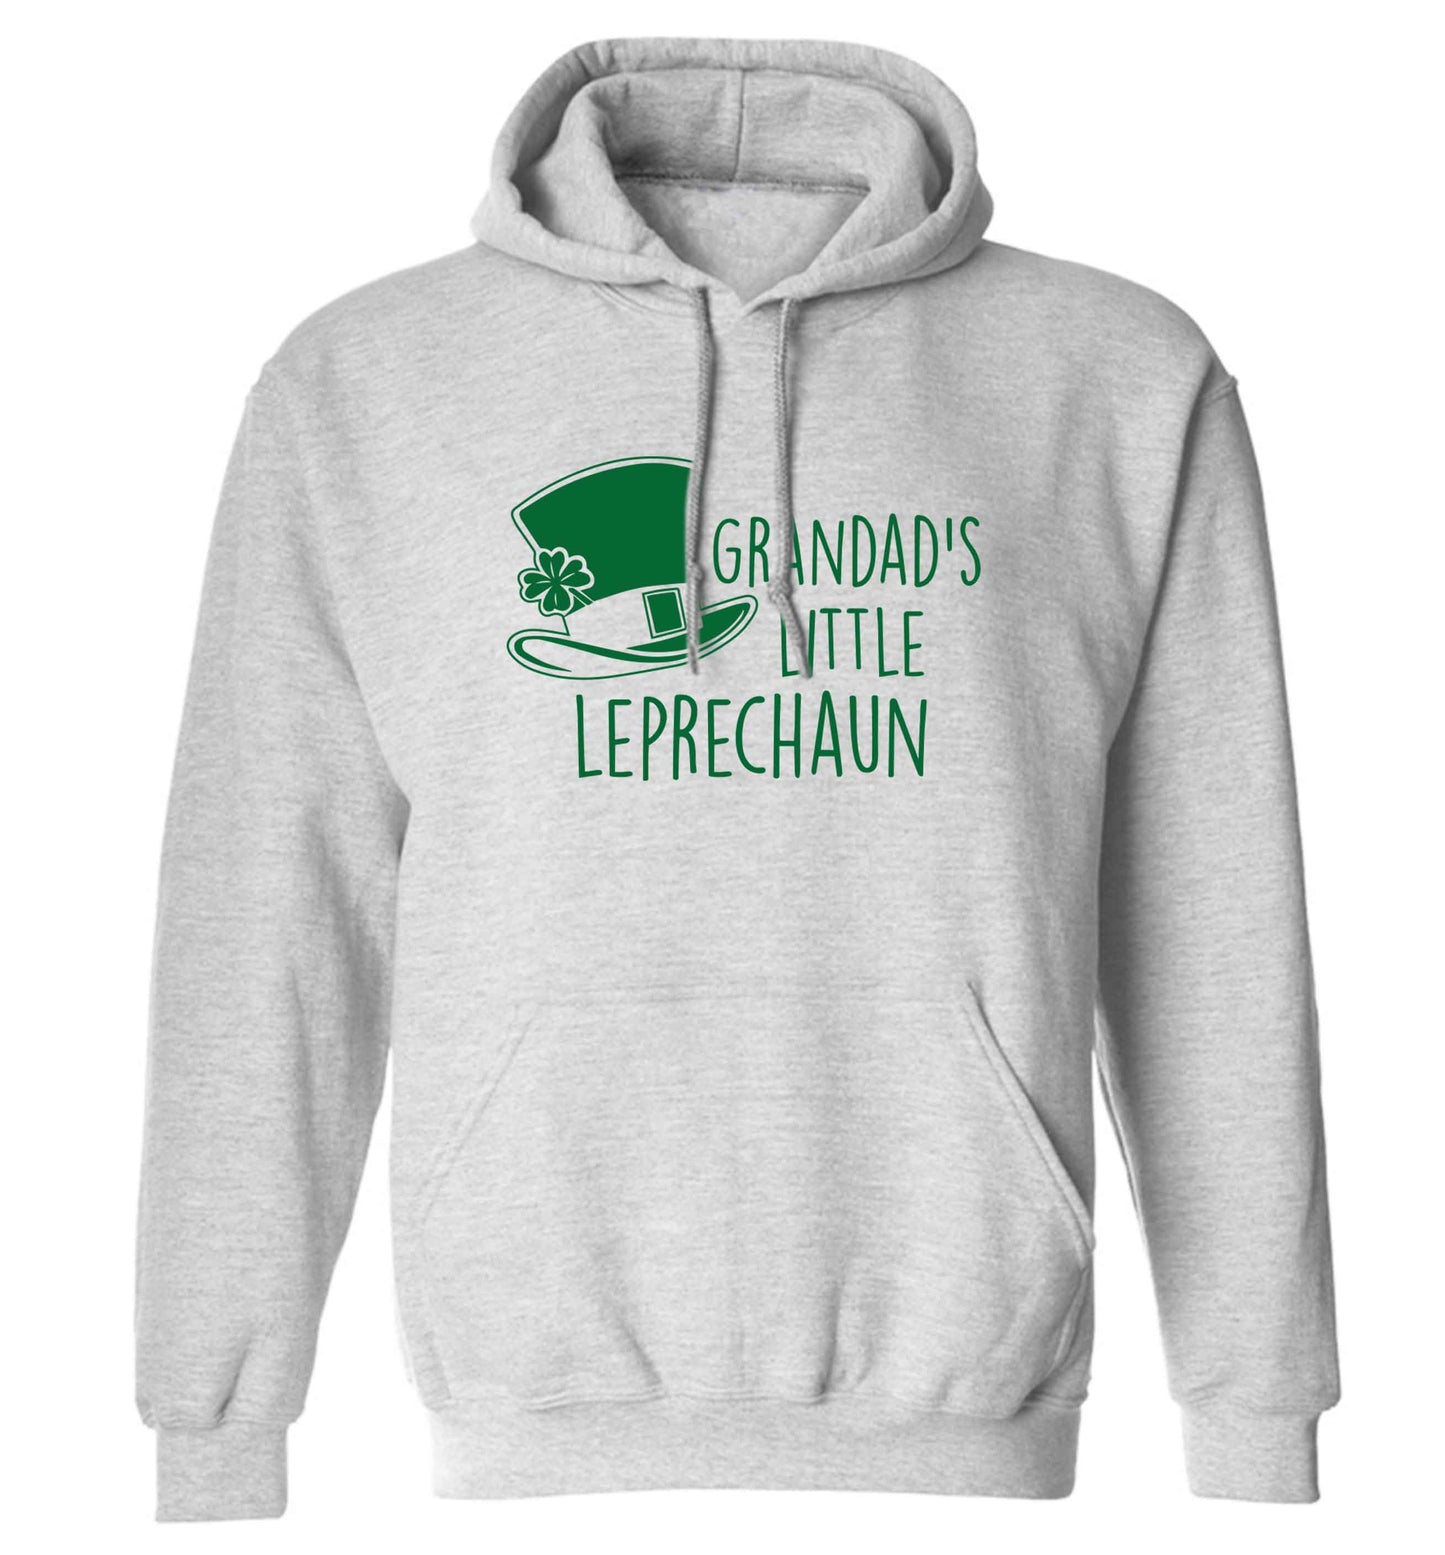 Grandad's little leprechaun adults unisex grey hoodie 2XL